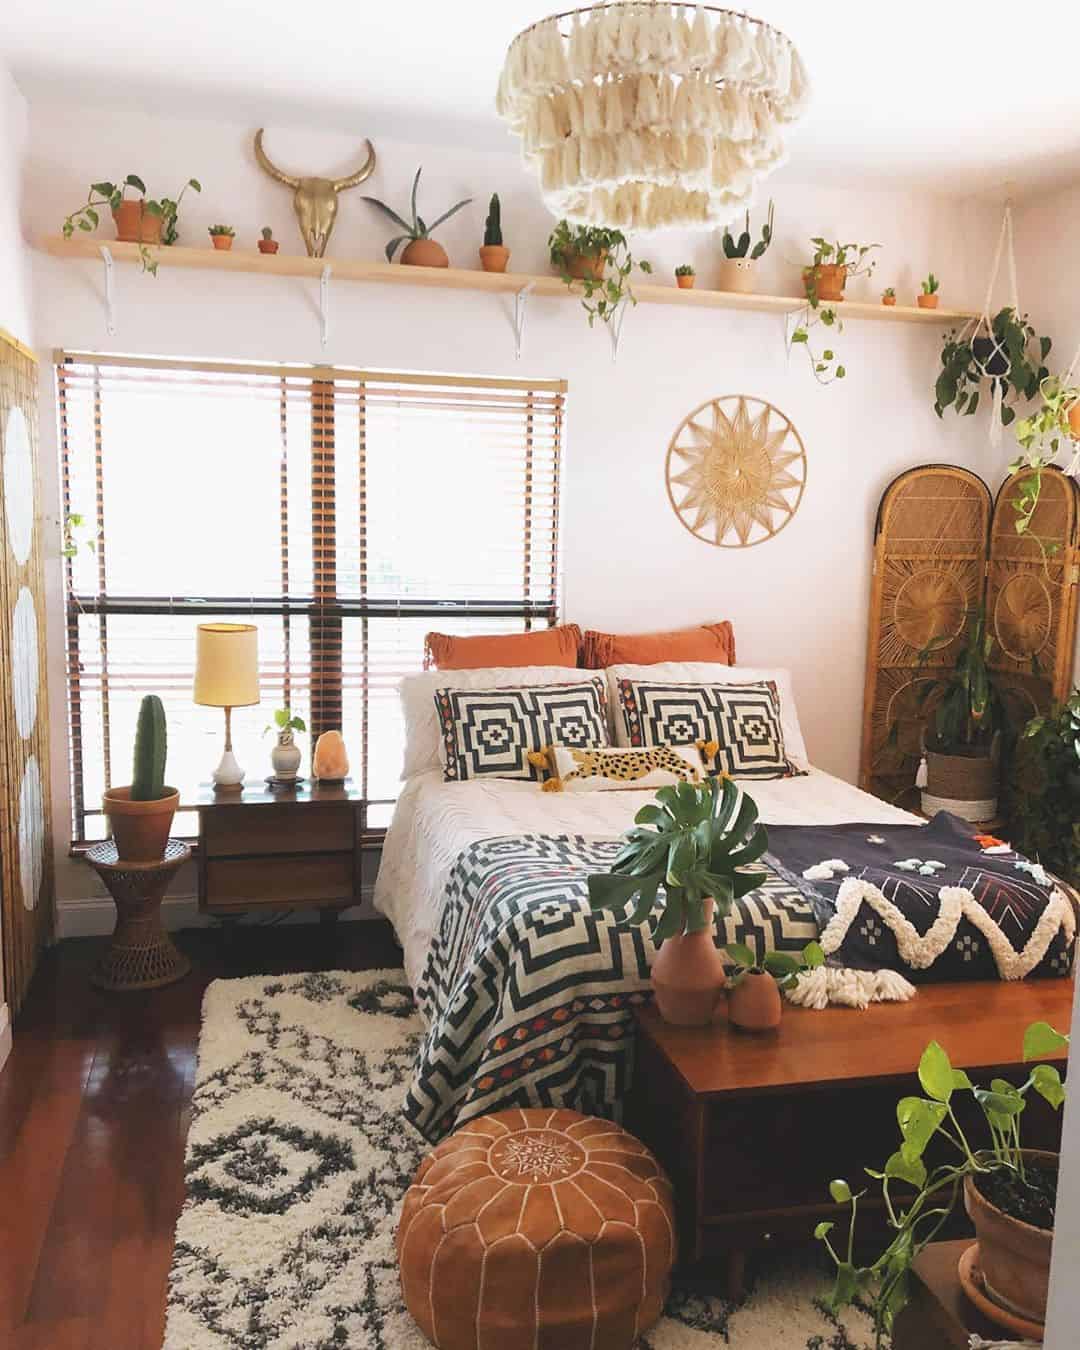 22 Dreamy Boho Bedroom Design Ideas